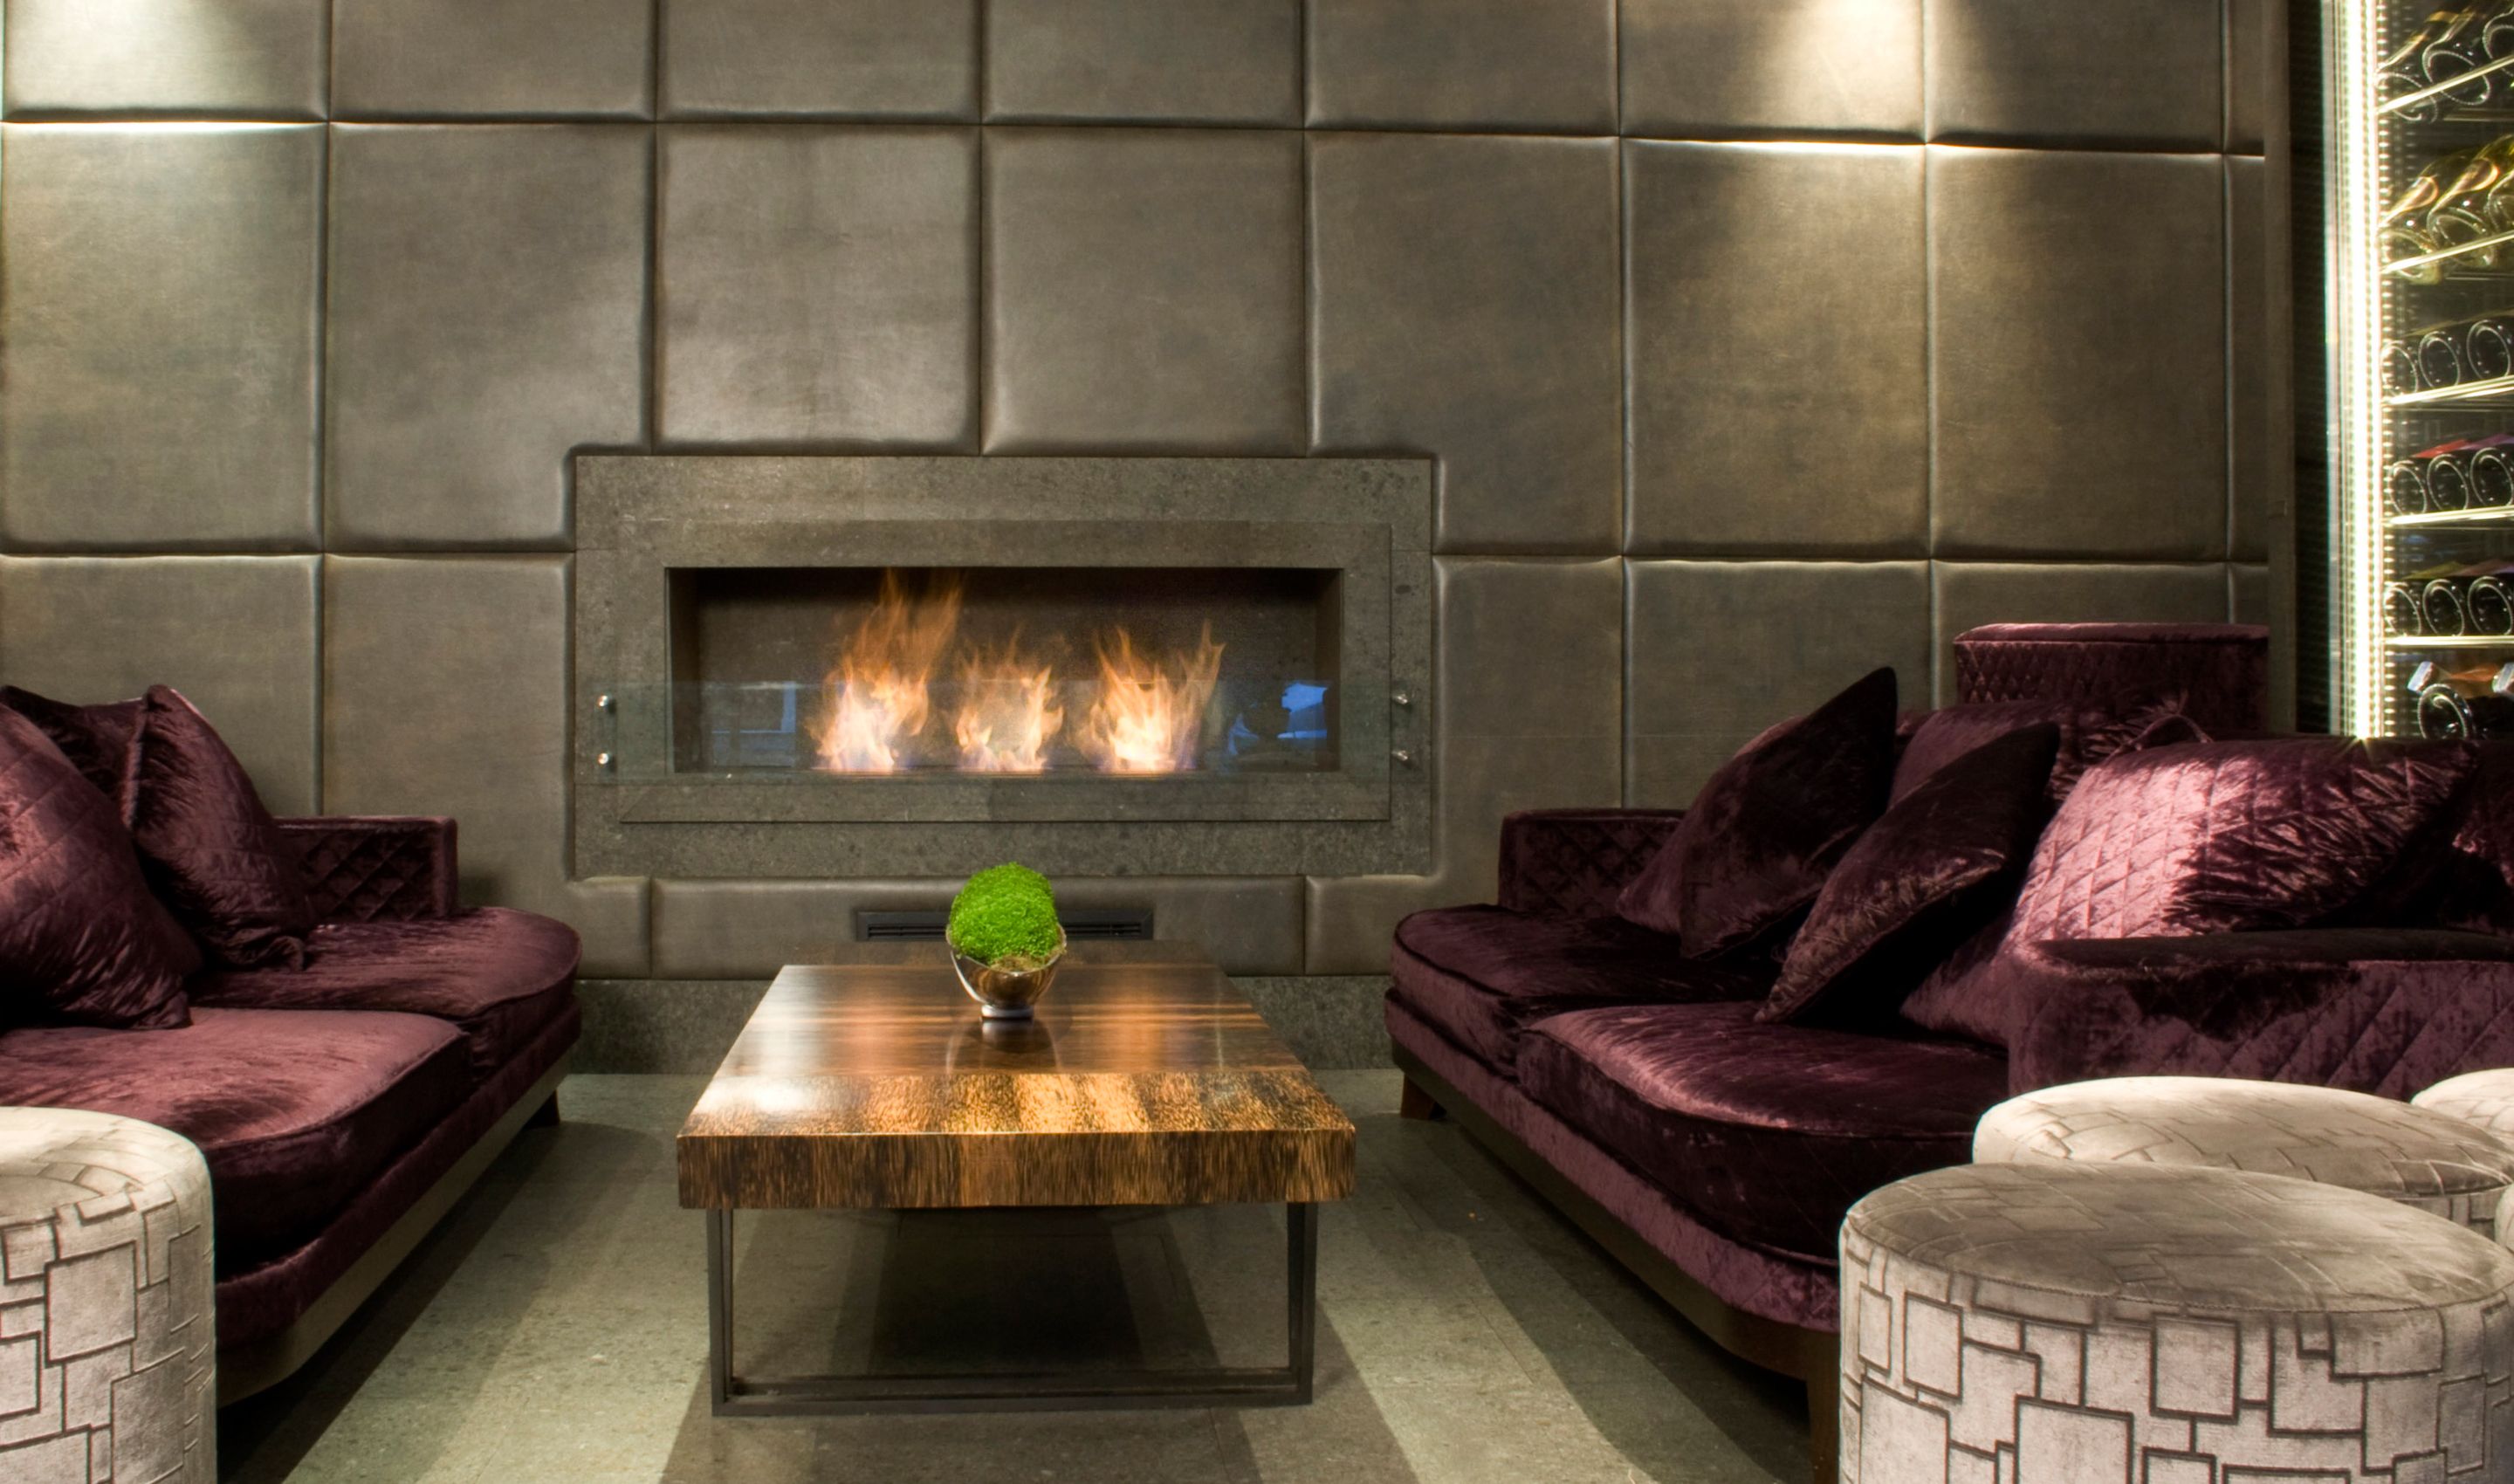 Inside Fireplace New Aka Hotel Instalation Indoor Fireplace Ideas Design